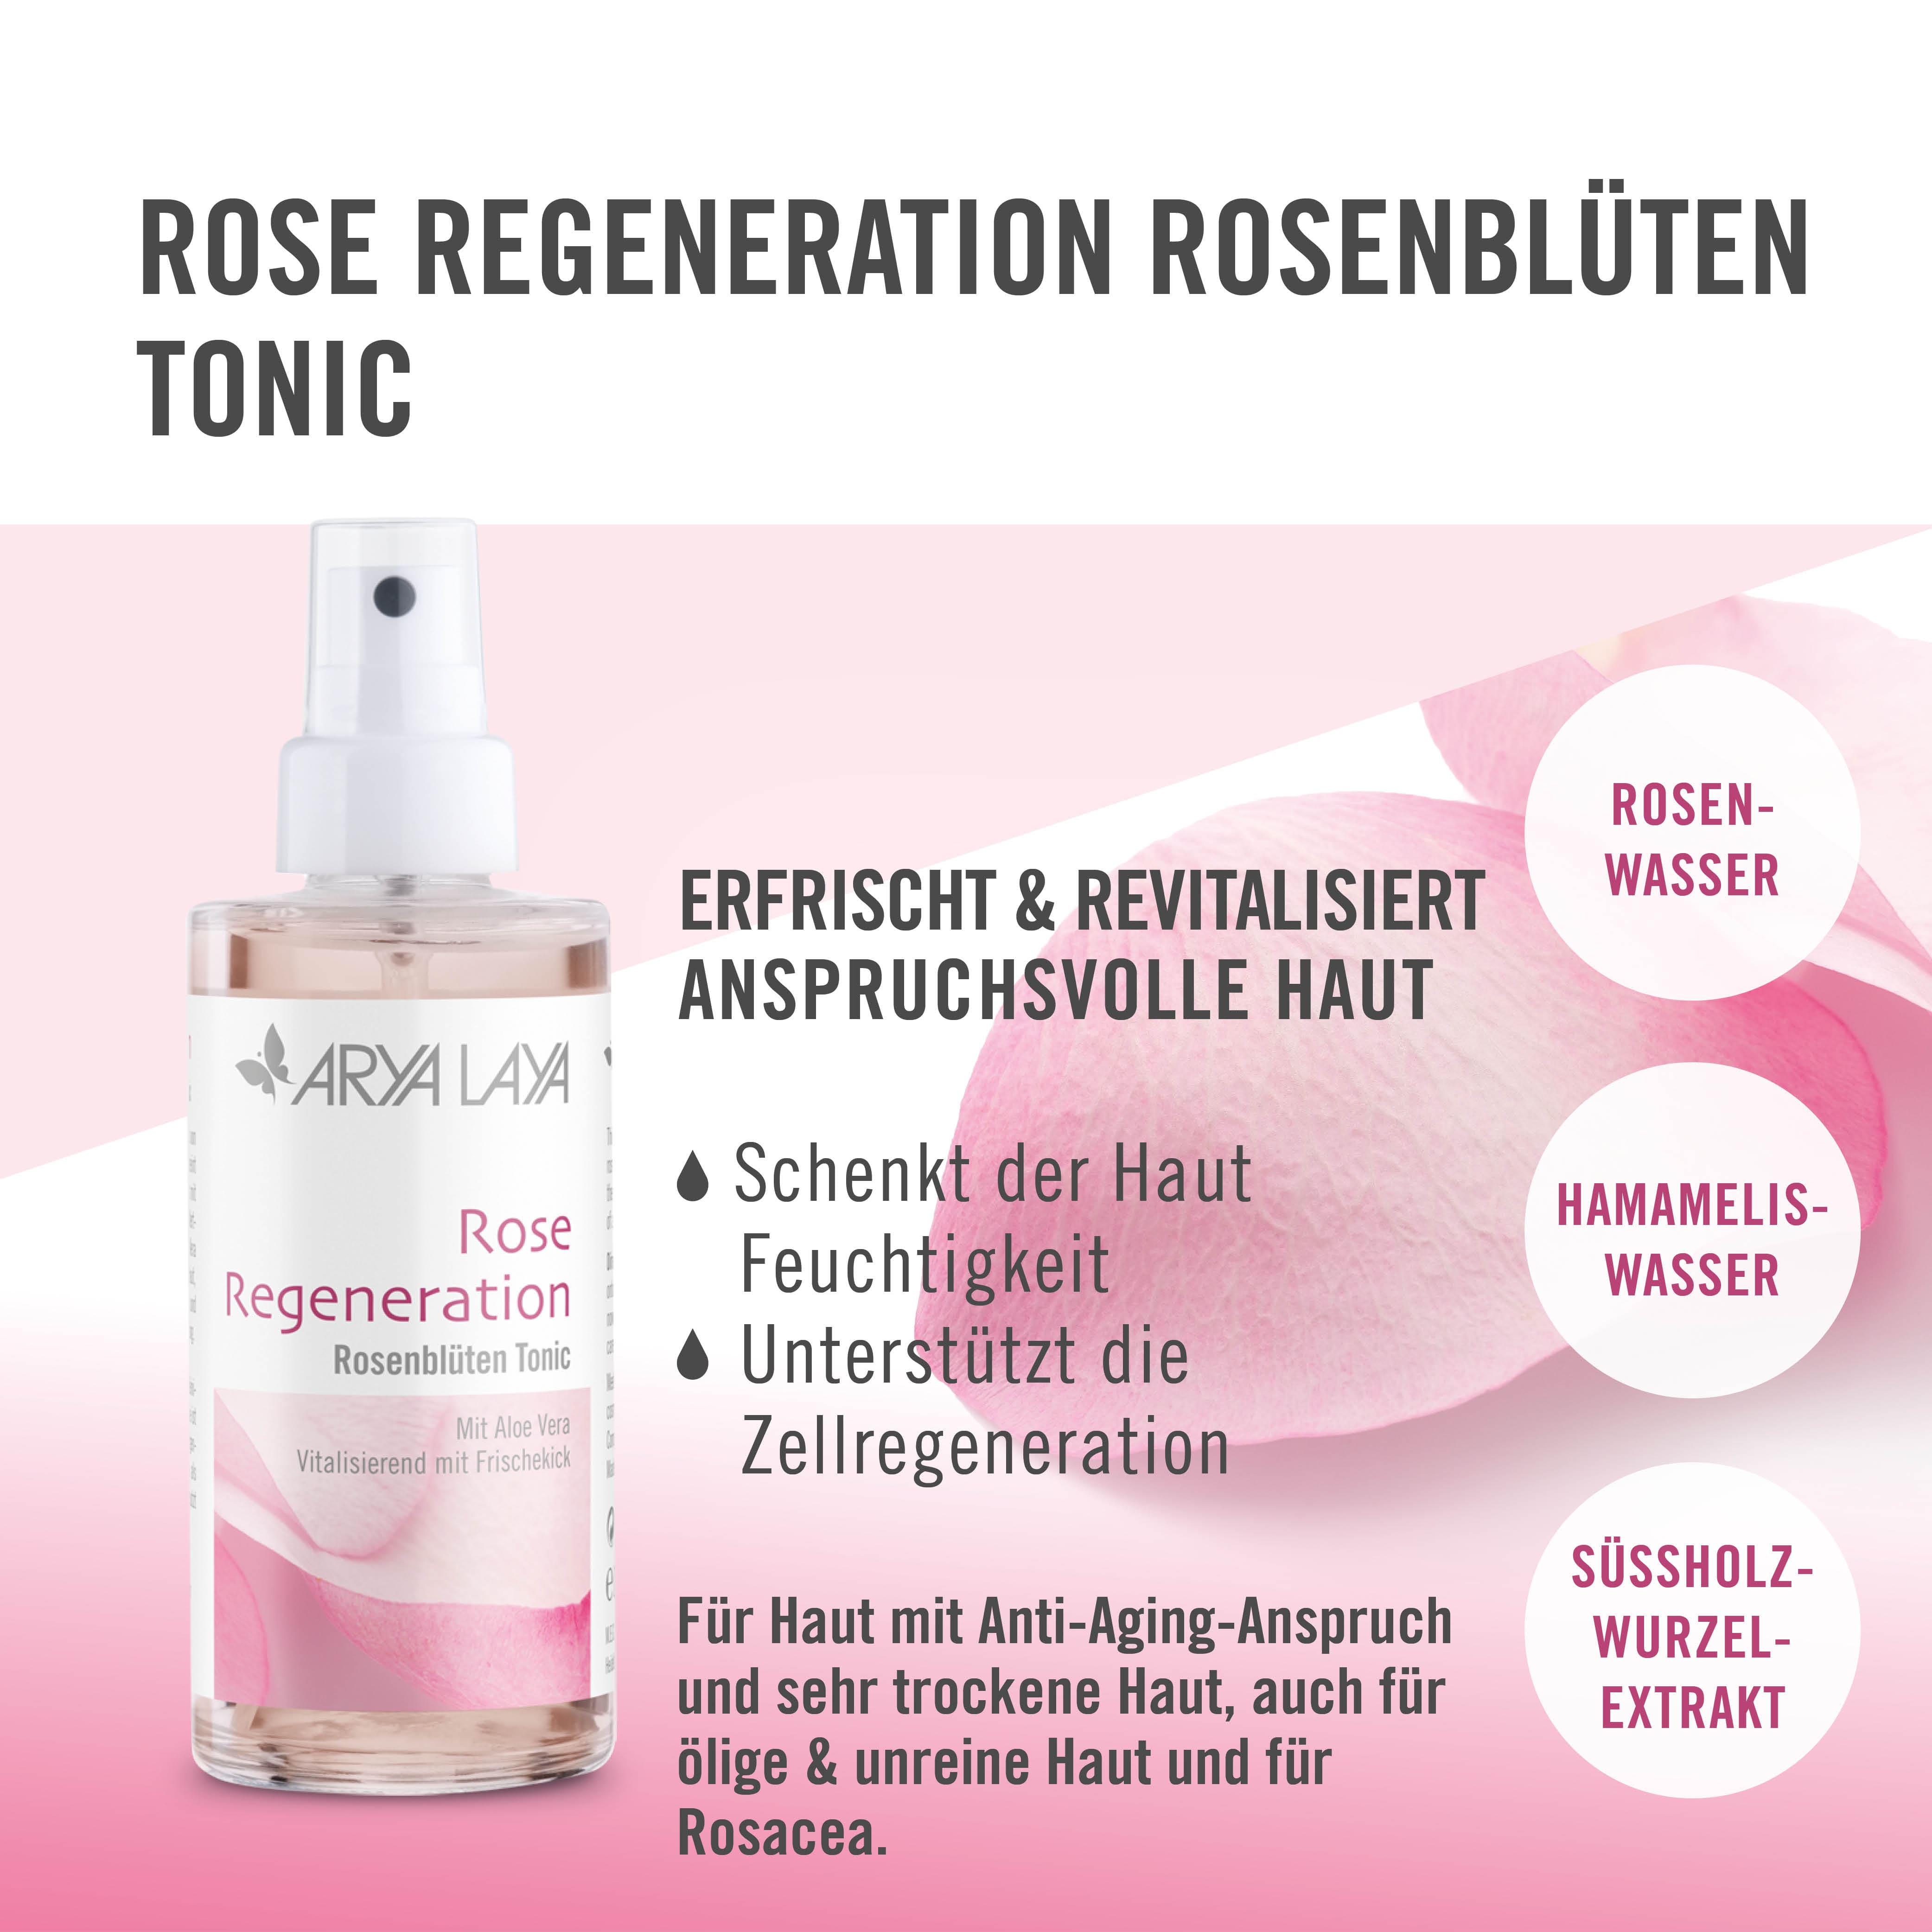 Wirkweise: ARYA LAYA Rose Regeneration Rosenblüten Tonic